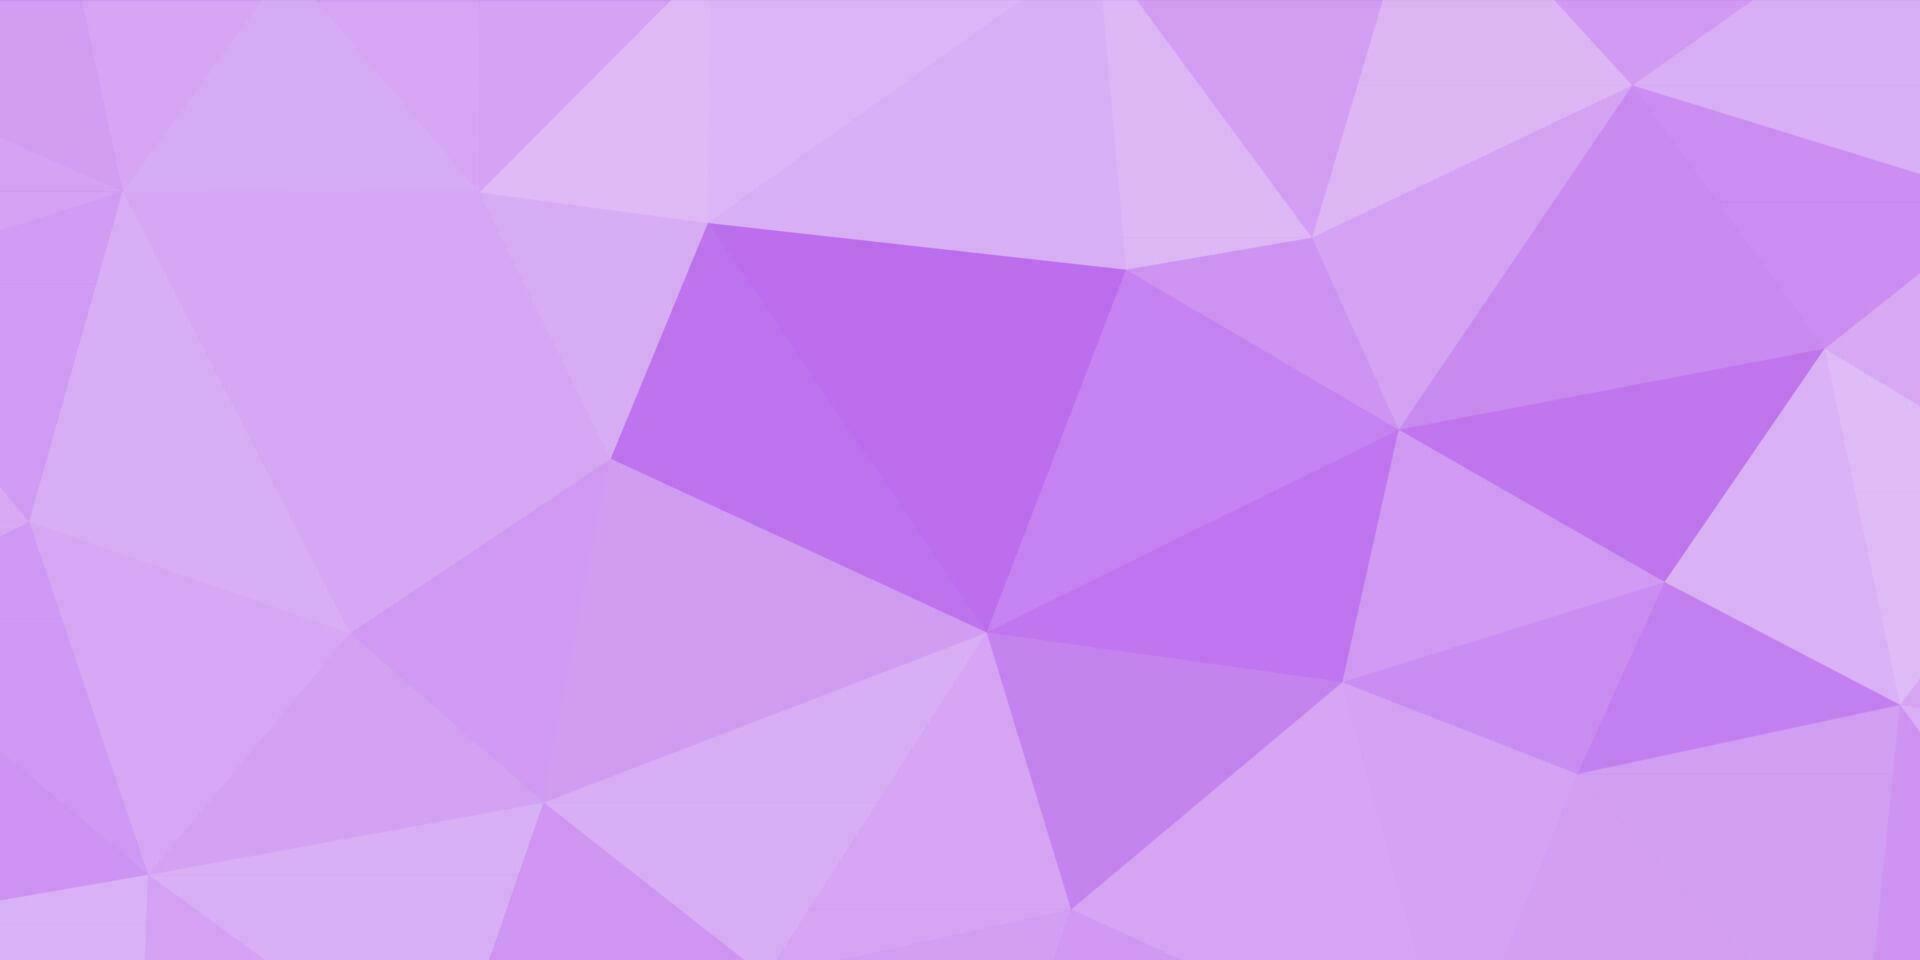 abstract lavendel meetkundig achtergrond met driehoeken vector